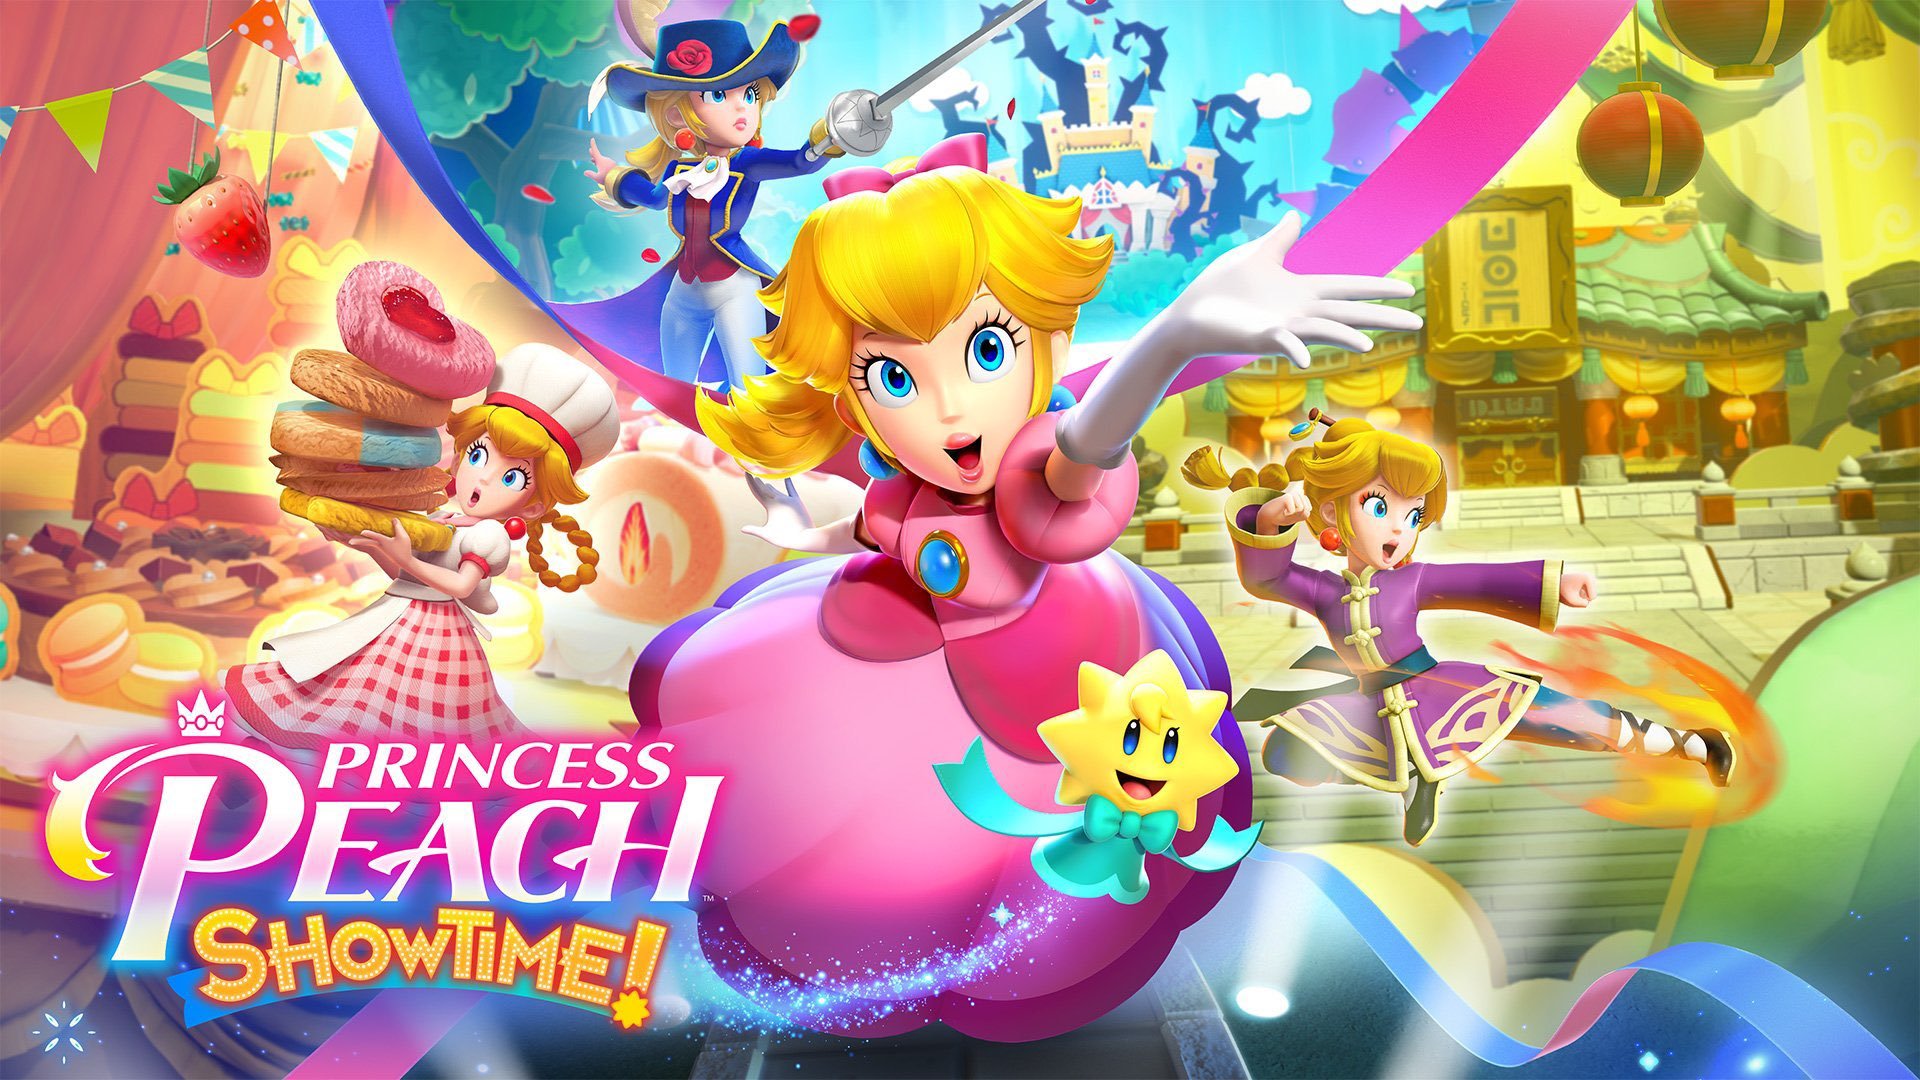 Princess Peach: Showtime Box Art Undergoes Drastic Changes - Fans Comparison and Reaction - News Directory 3